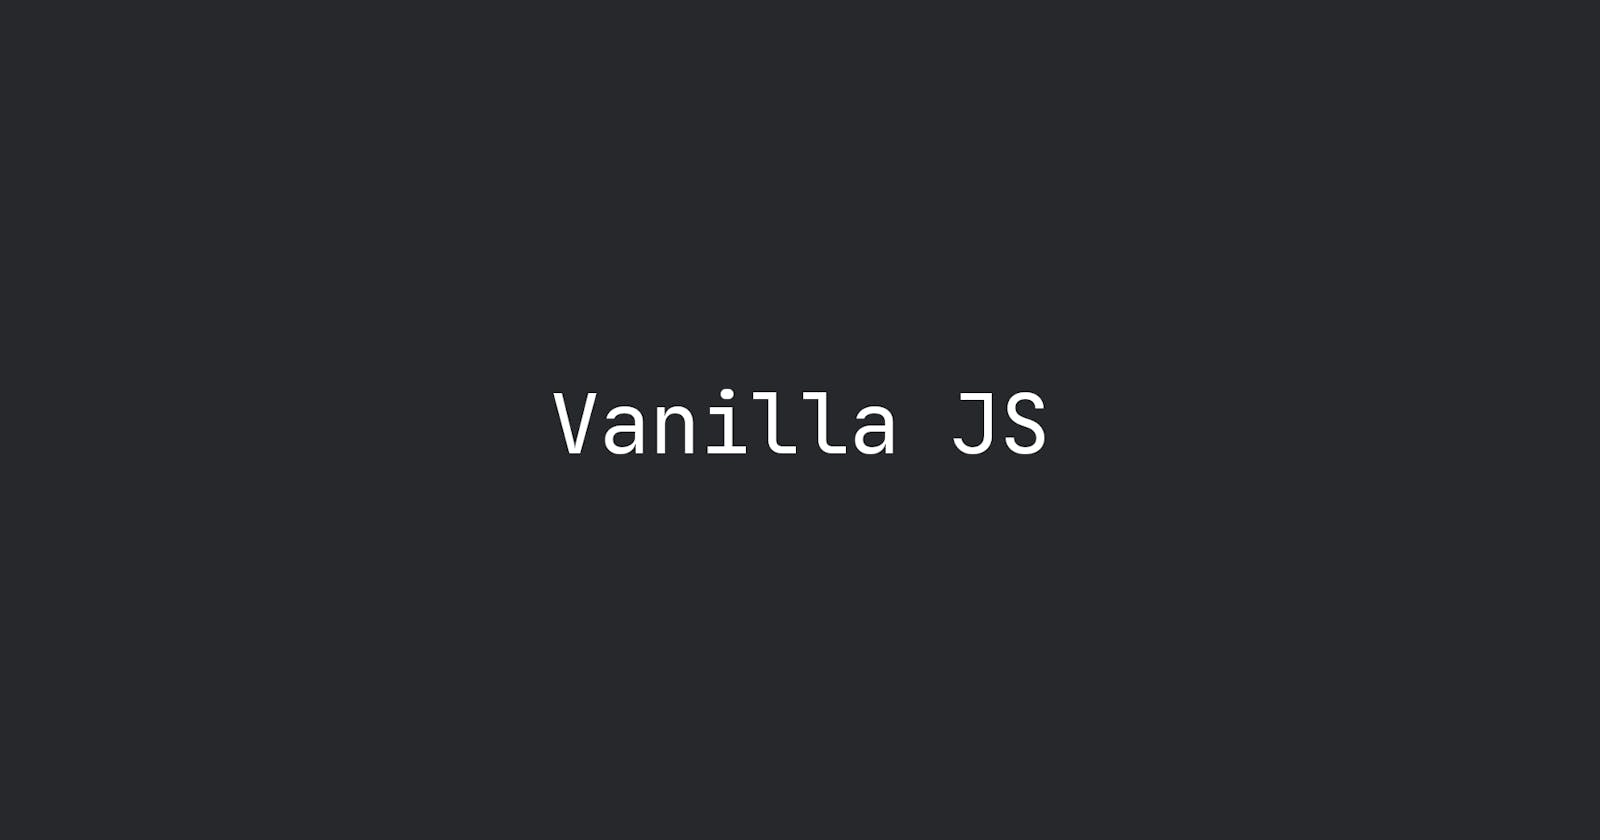 Creating a family list app with vanilla JavaScript